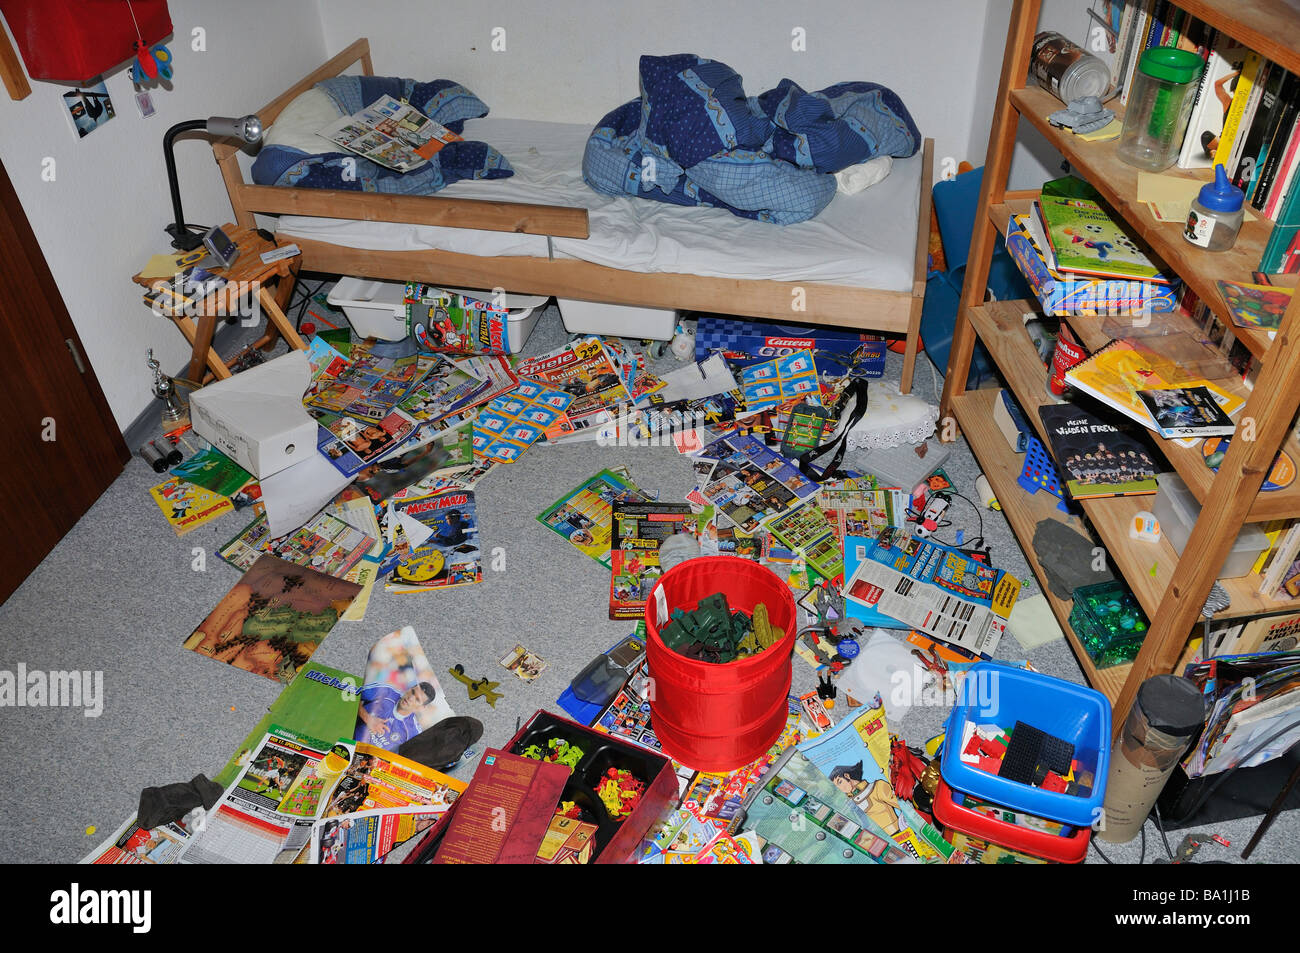 Cluttered children's room Stock Photo